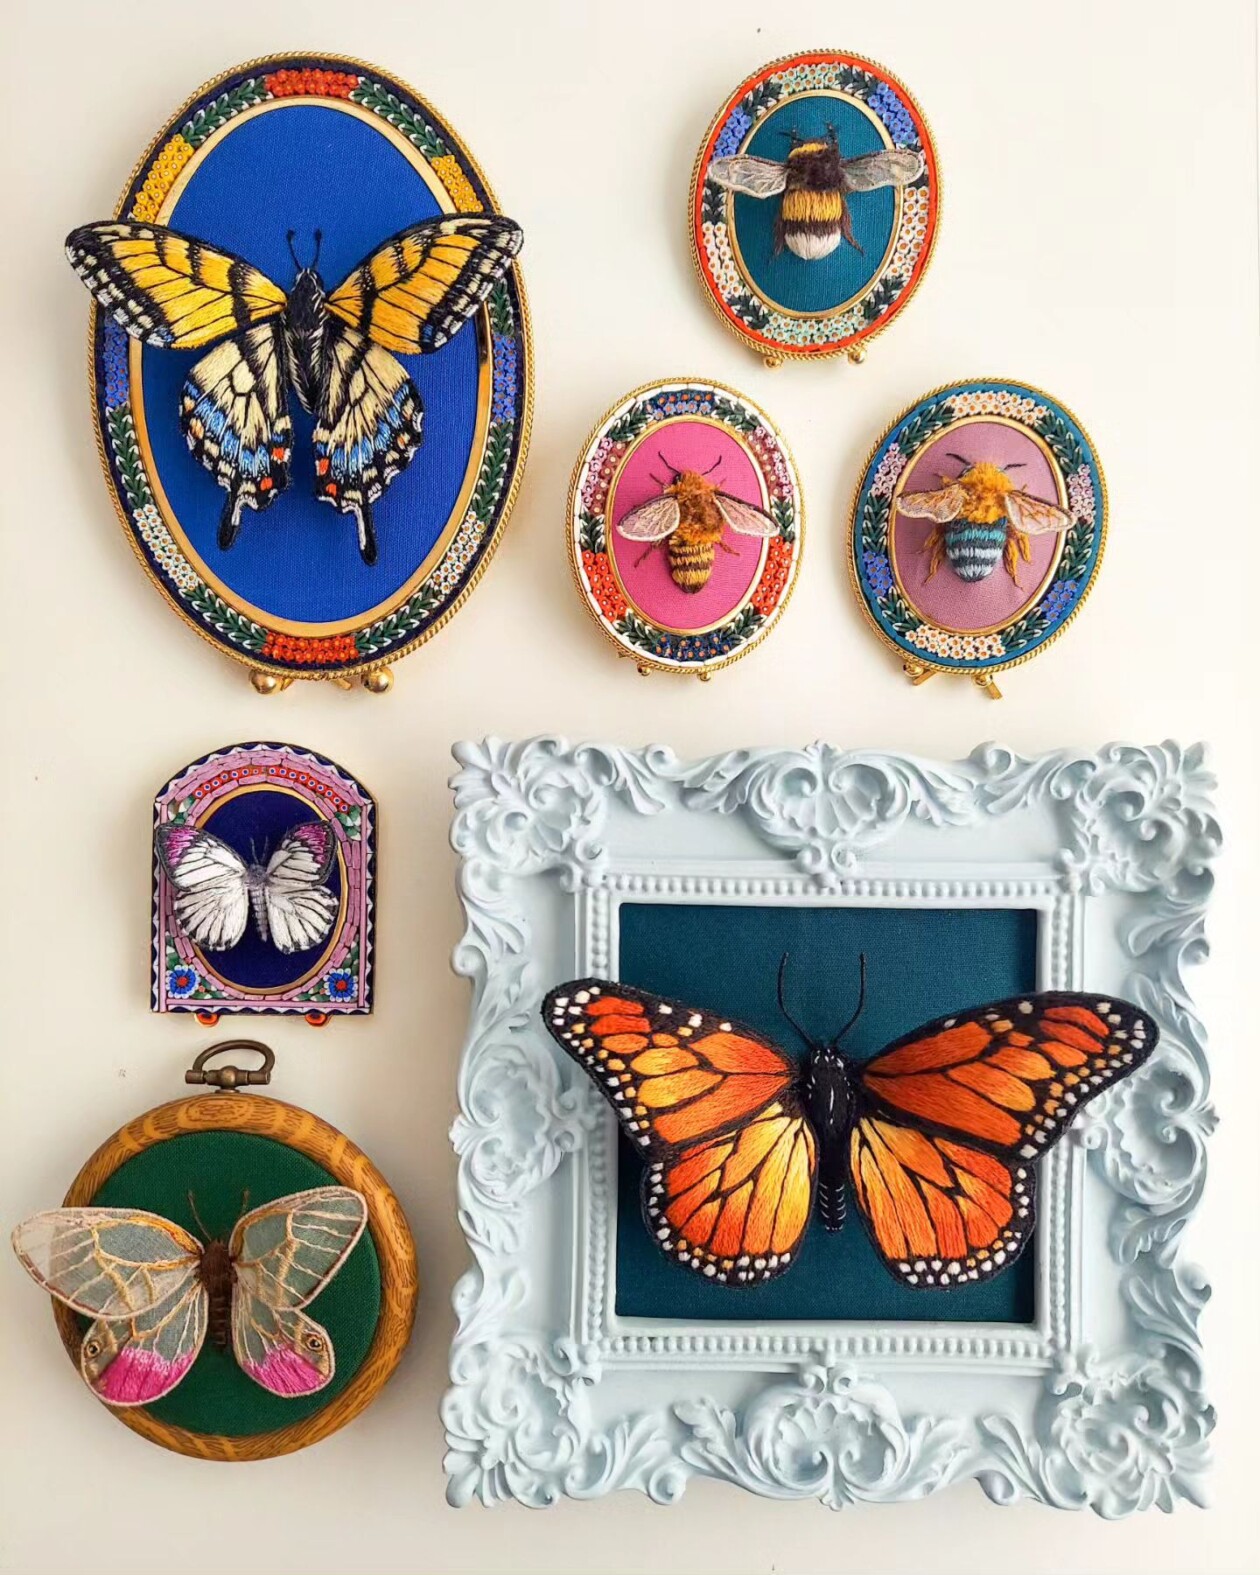 Life Like Three Dimensional Animal Embroideries By Megan Zaniewski (15)